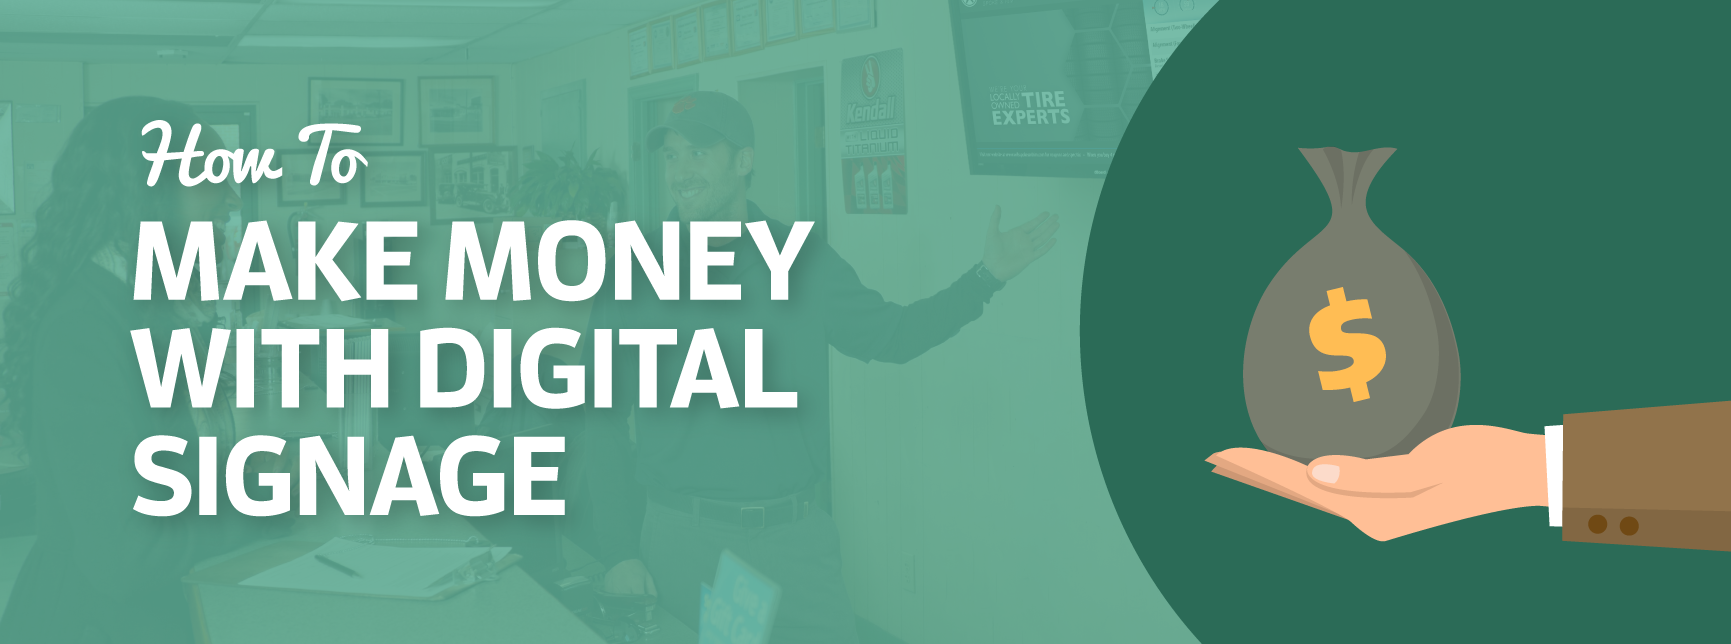 make_money_with_digital_signage